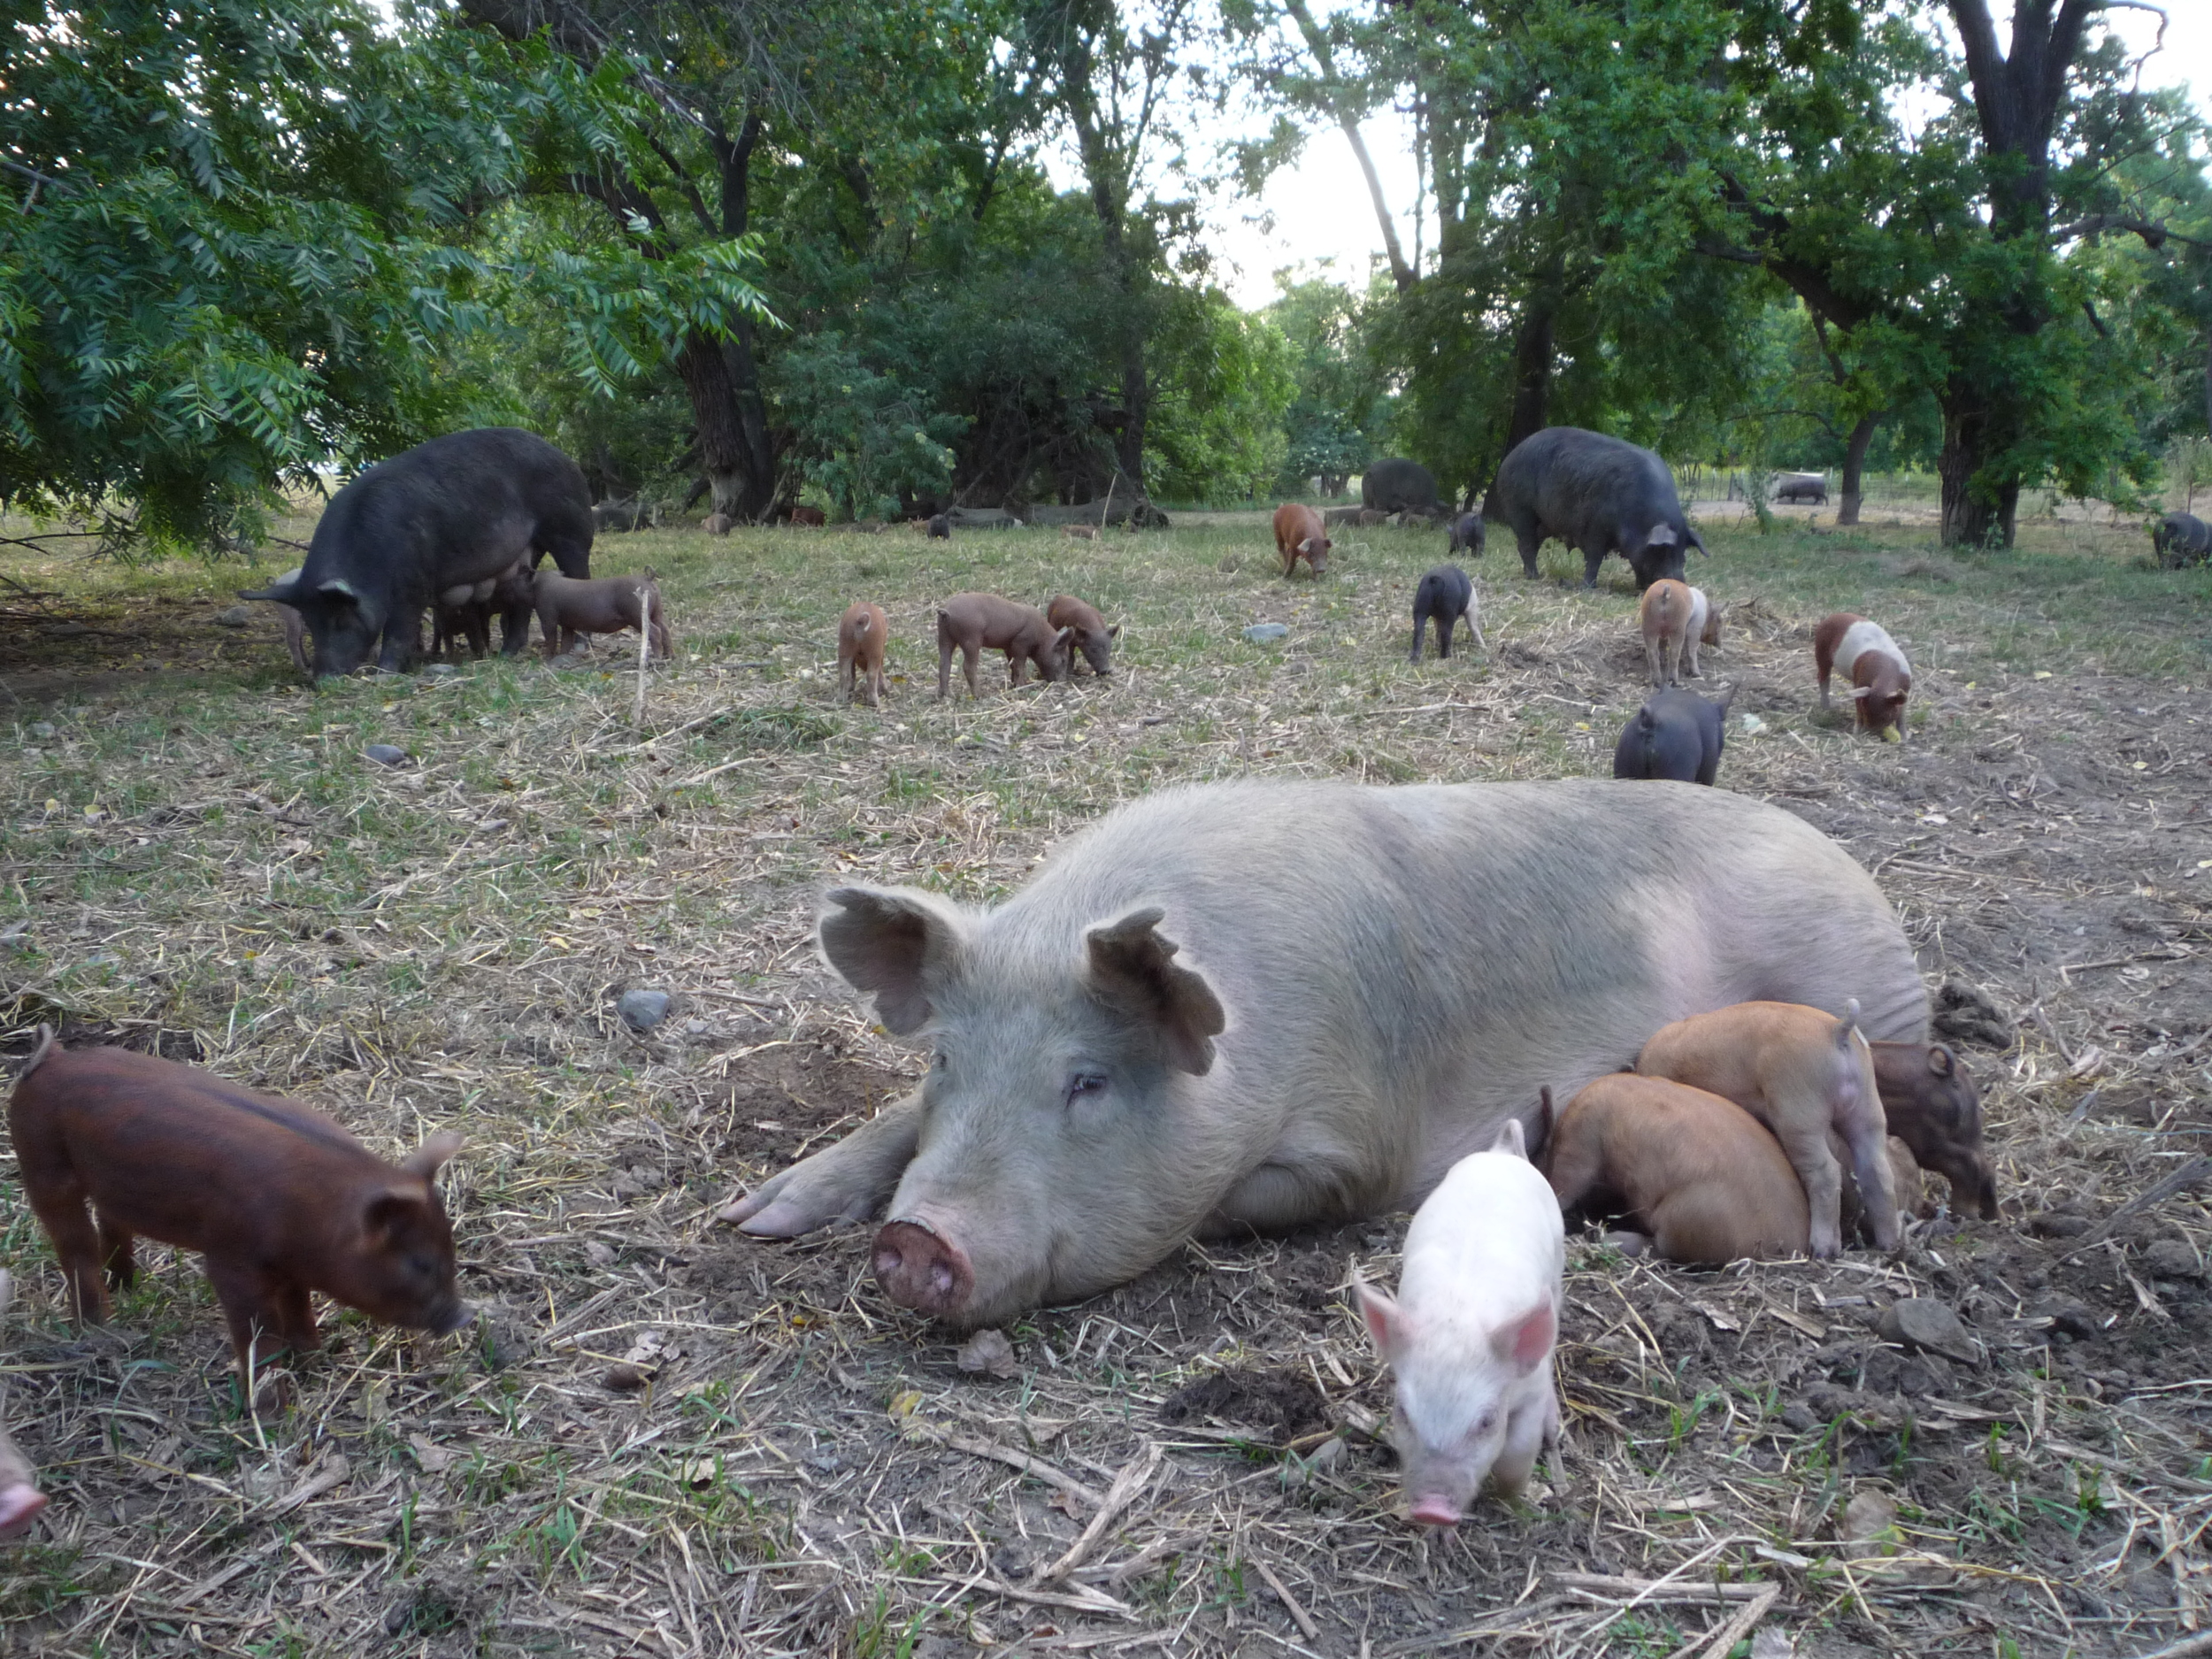 Piglets on pasture